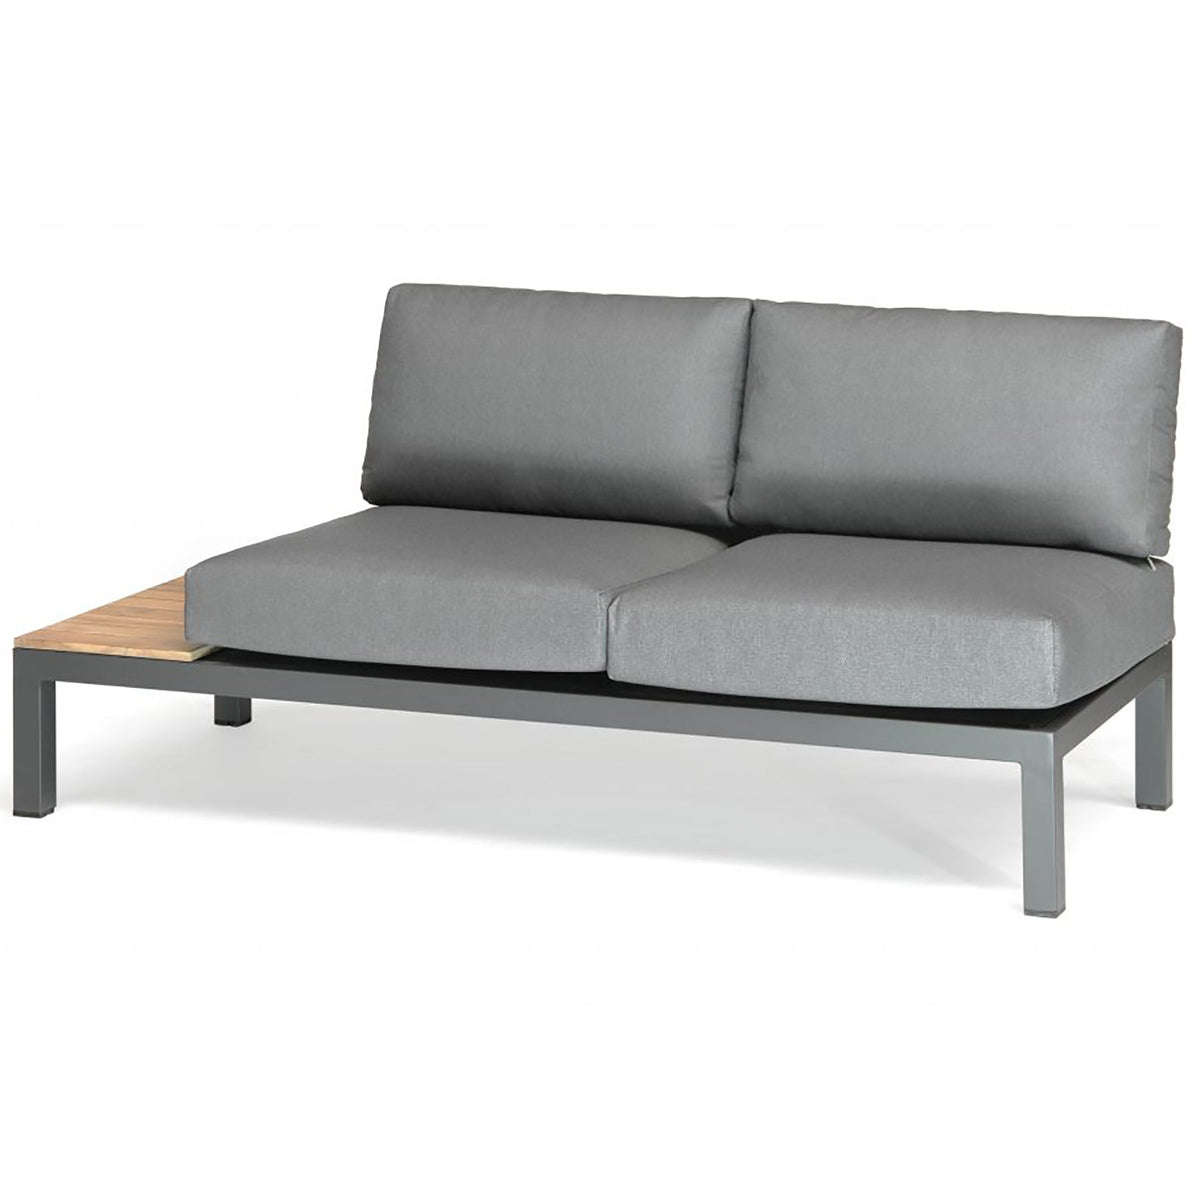 Kettler Elba Signature Low Large Corner Lounge Sofa Set with Coffee Table